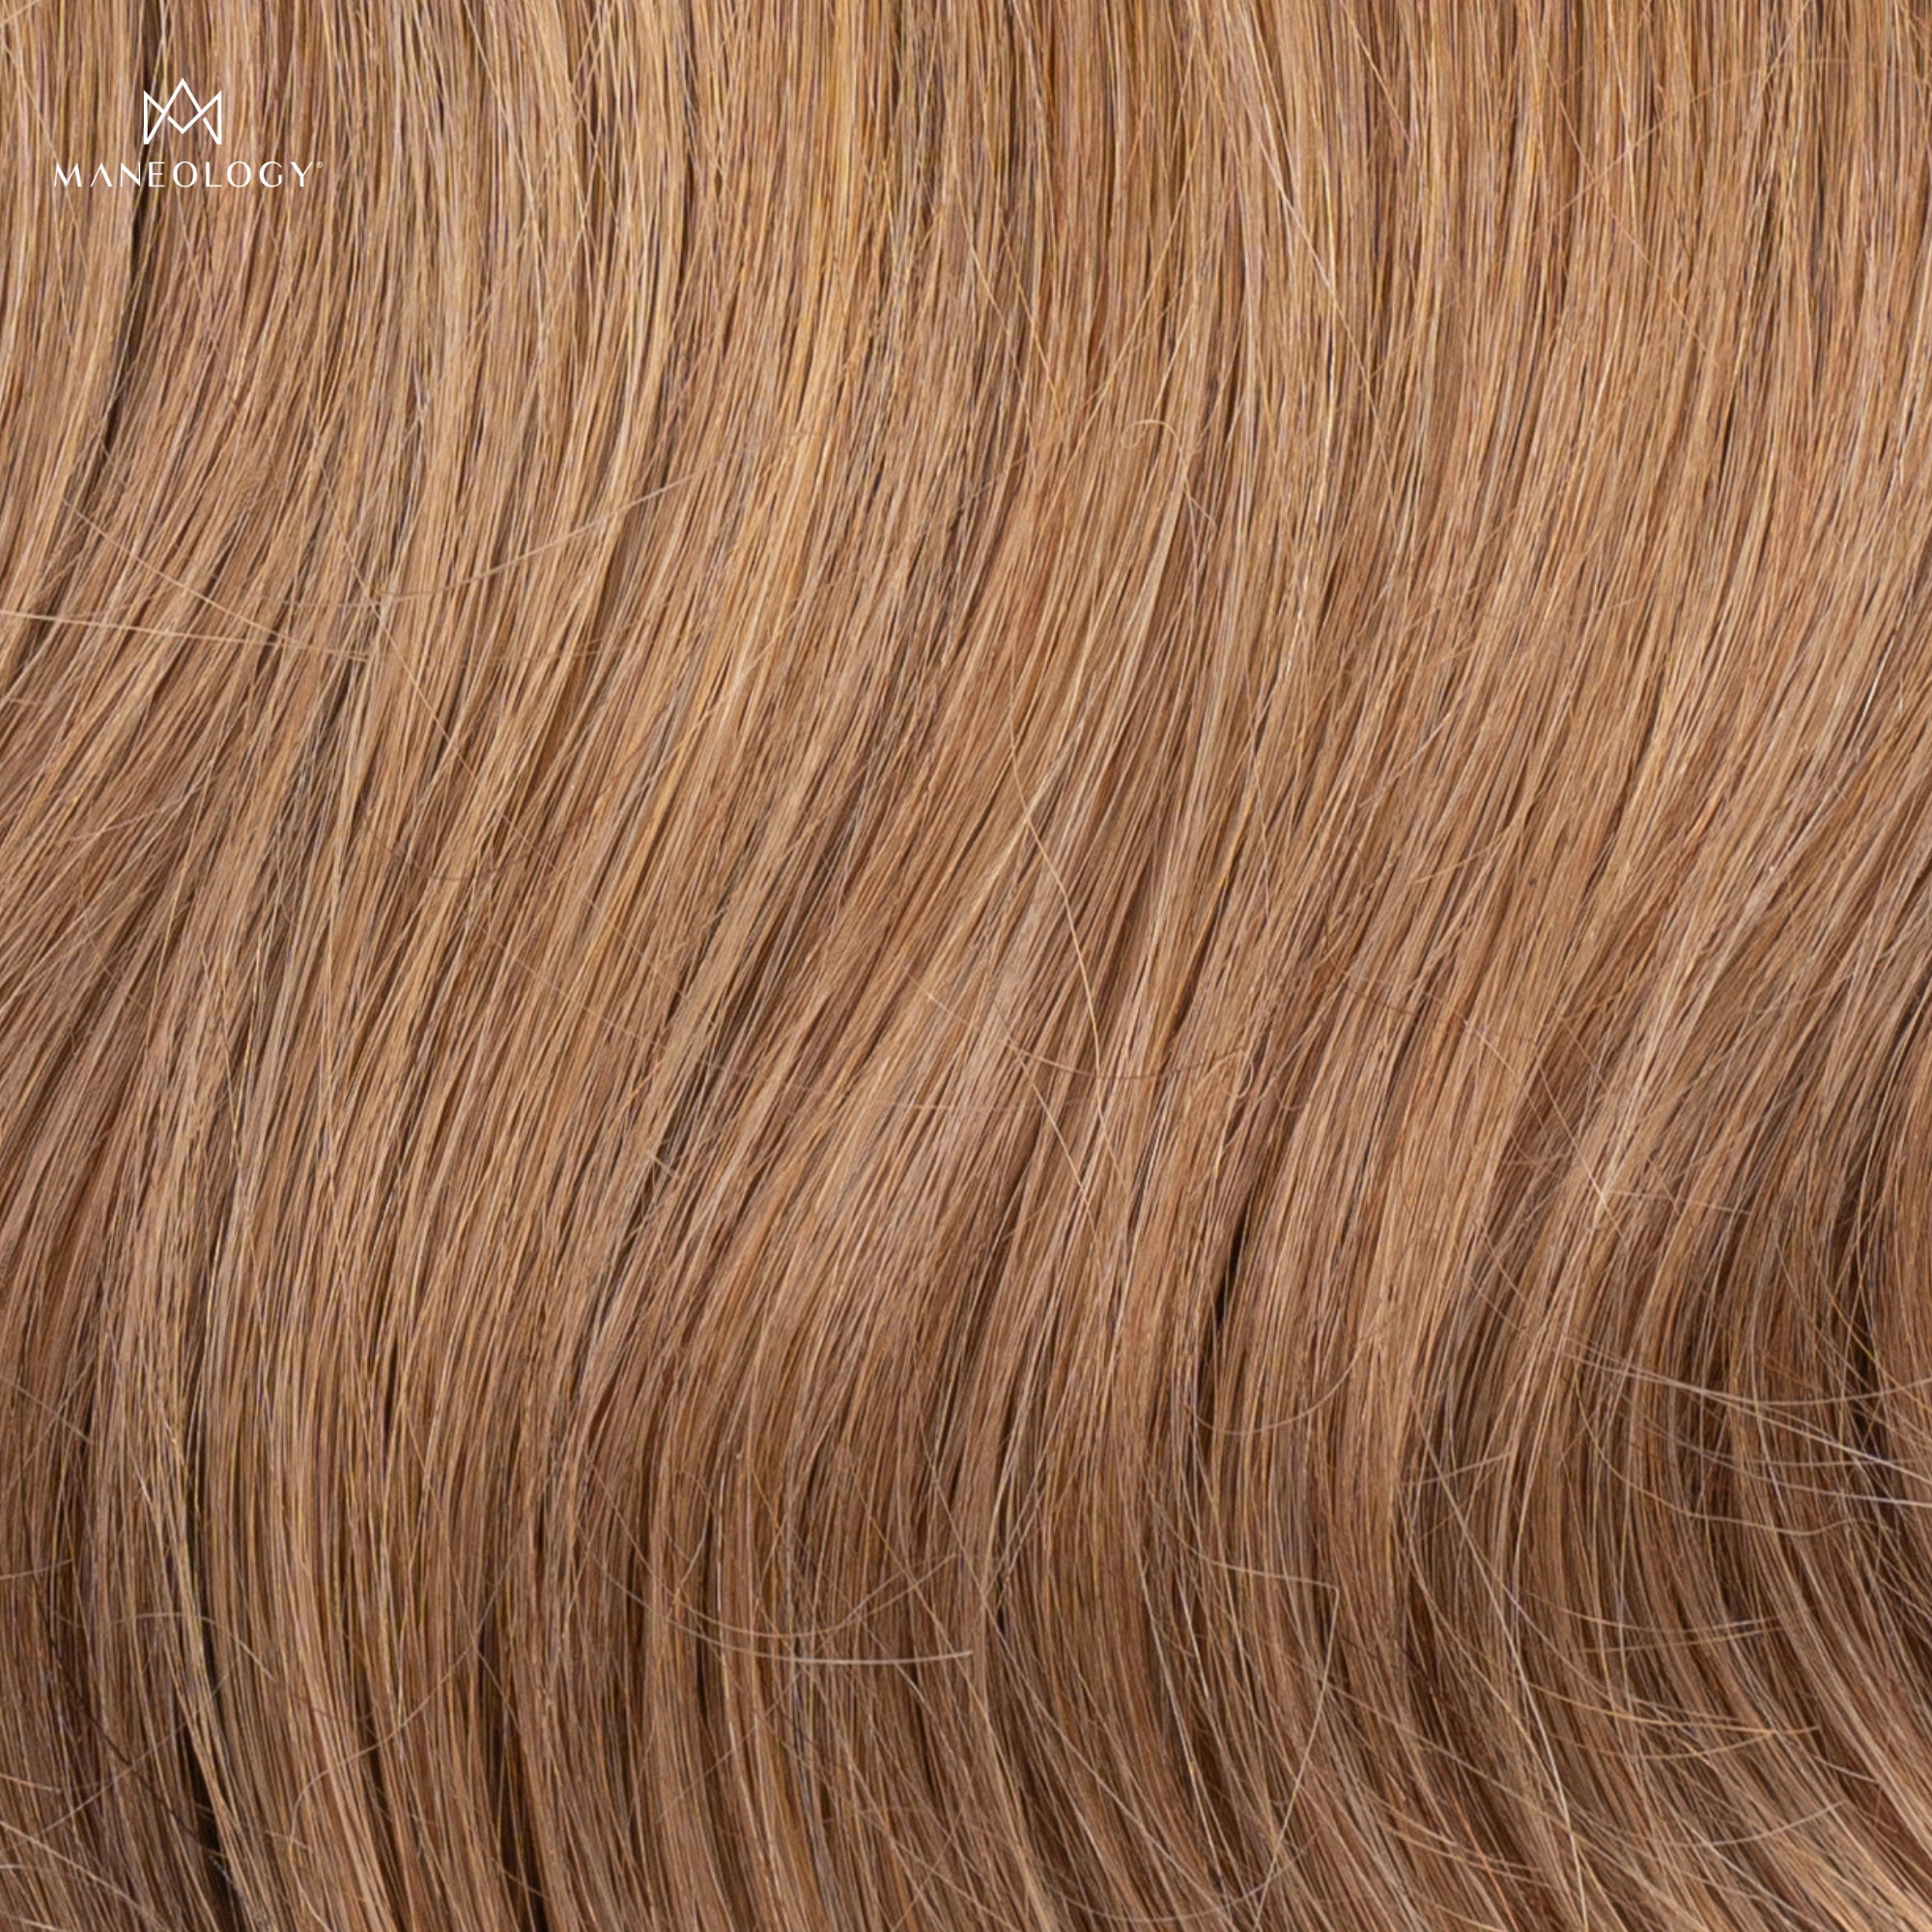 Seamless Tape in Hair Extensions Dark Blonde - Maneology Hair Extensions